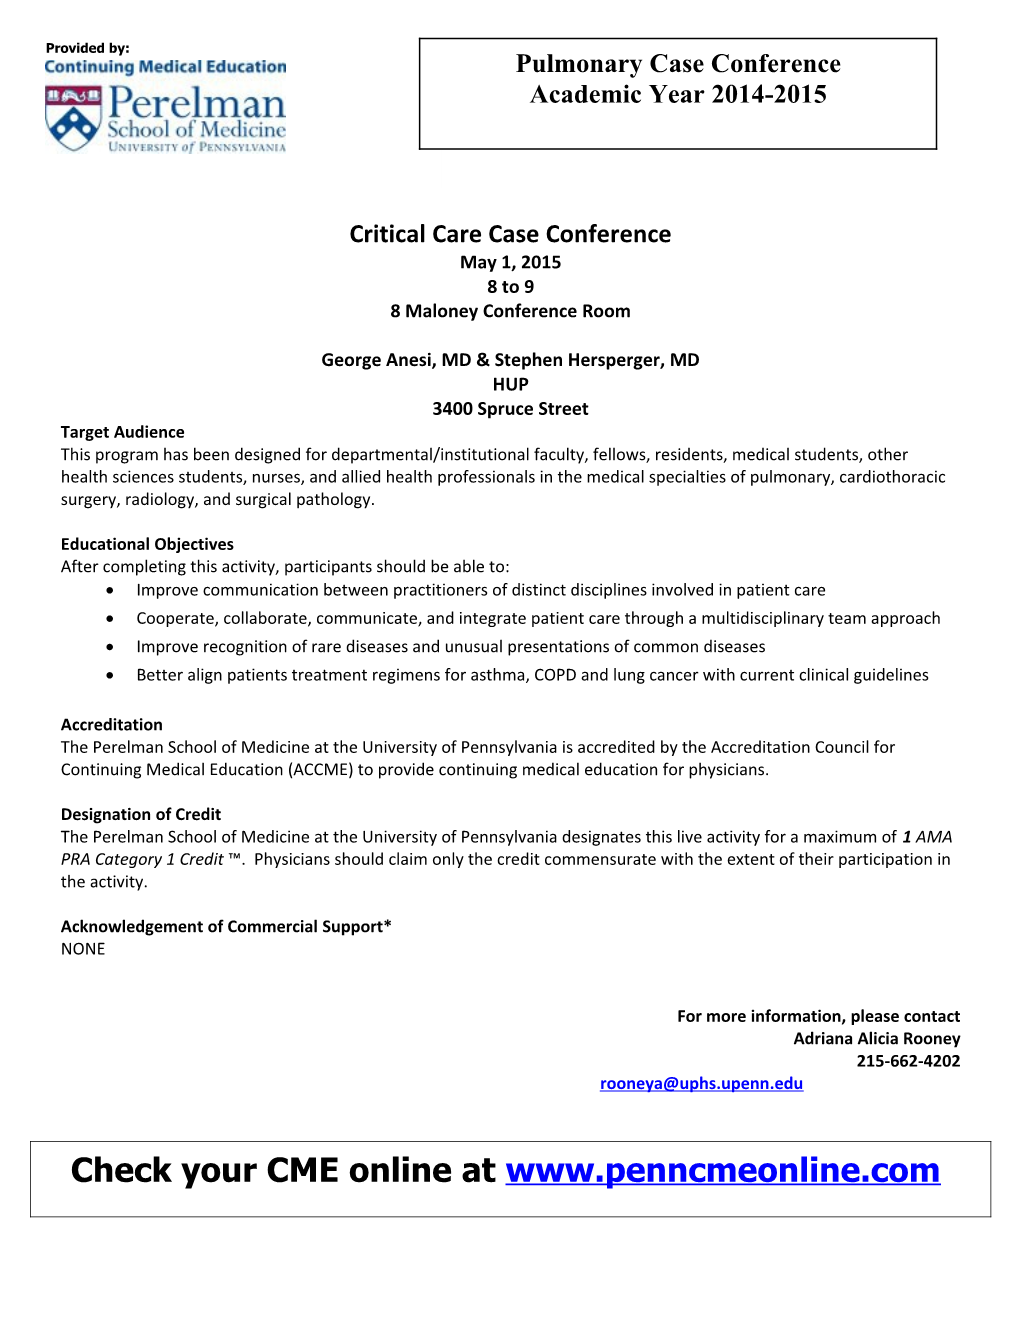 Critical Care Case Conference